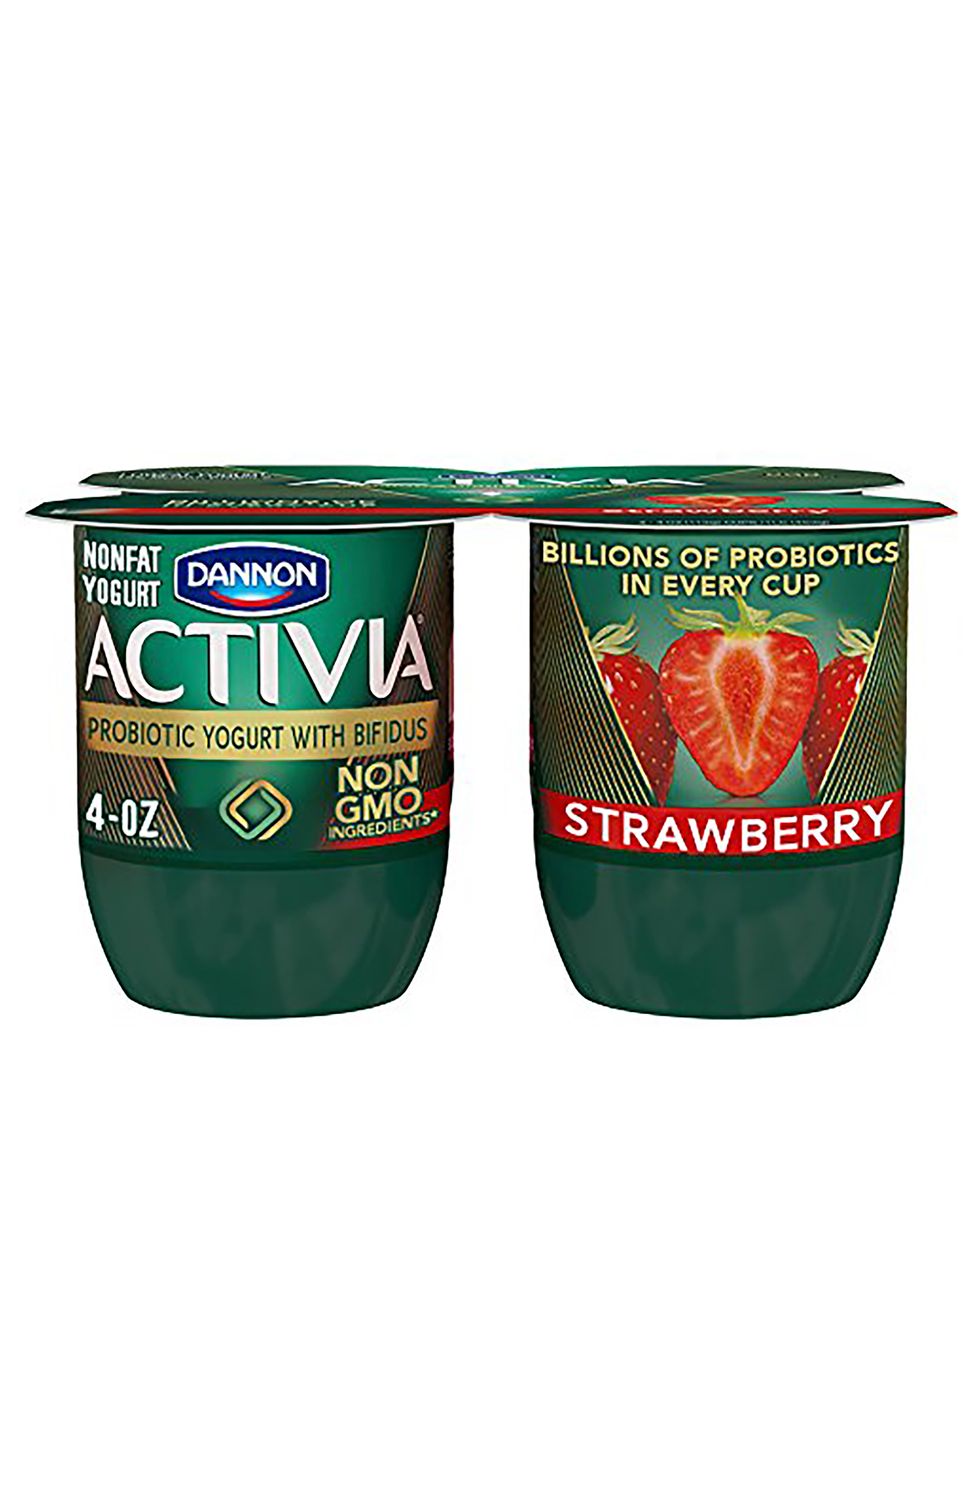 activia yogurt best yogurt brands